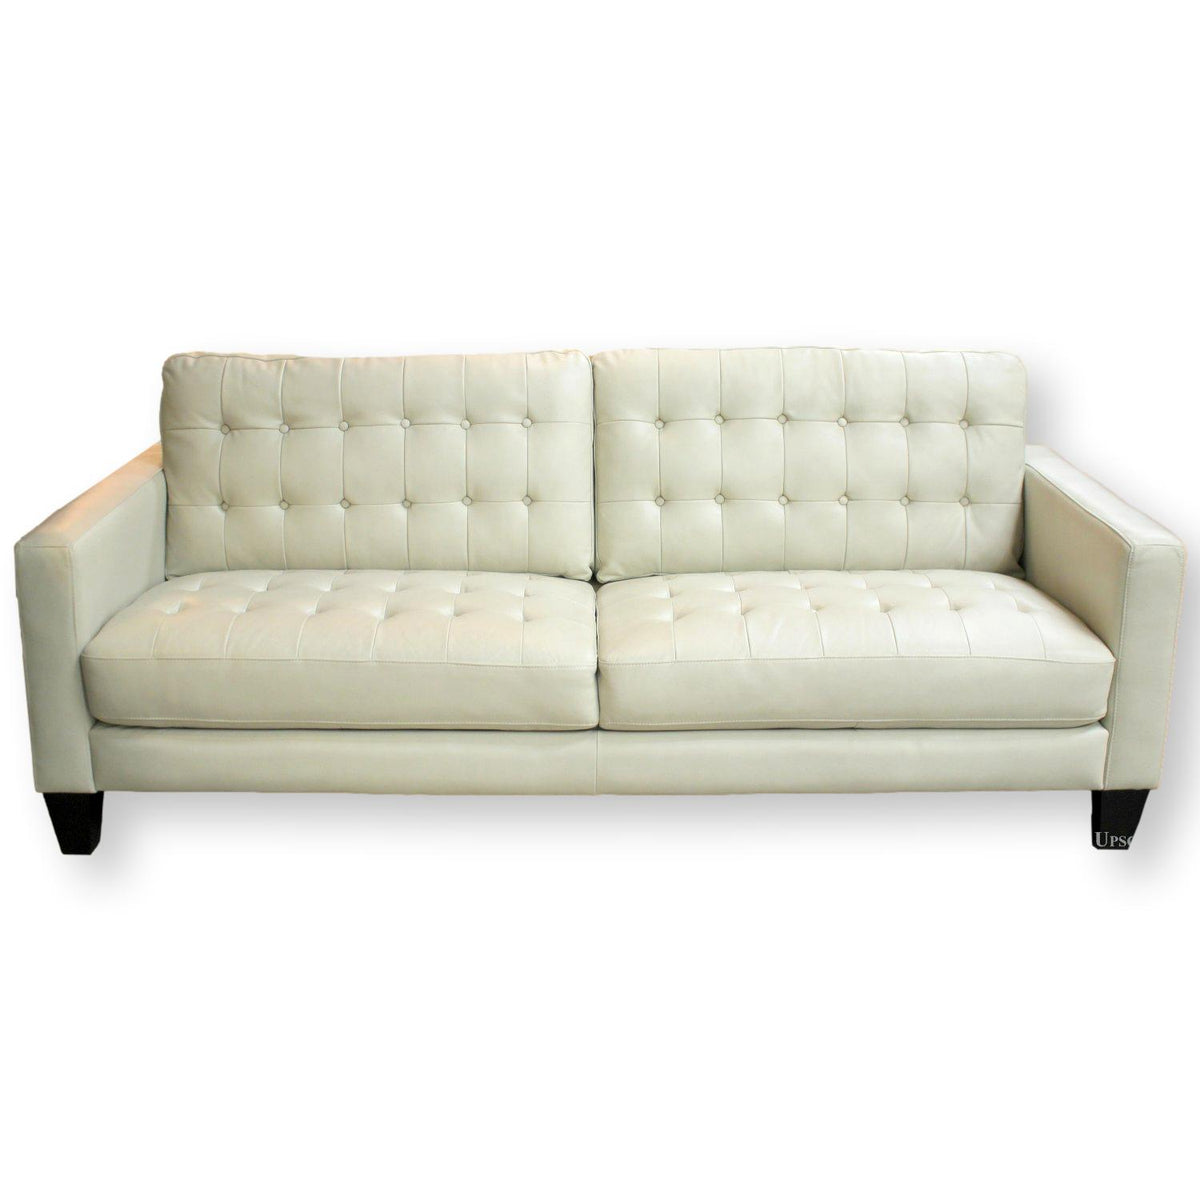 Abbyson Bone Leather Sofa